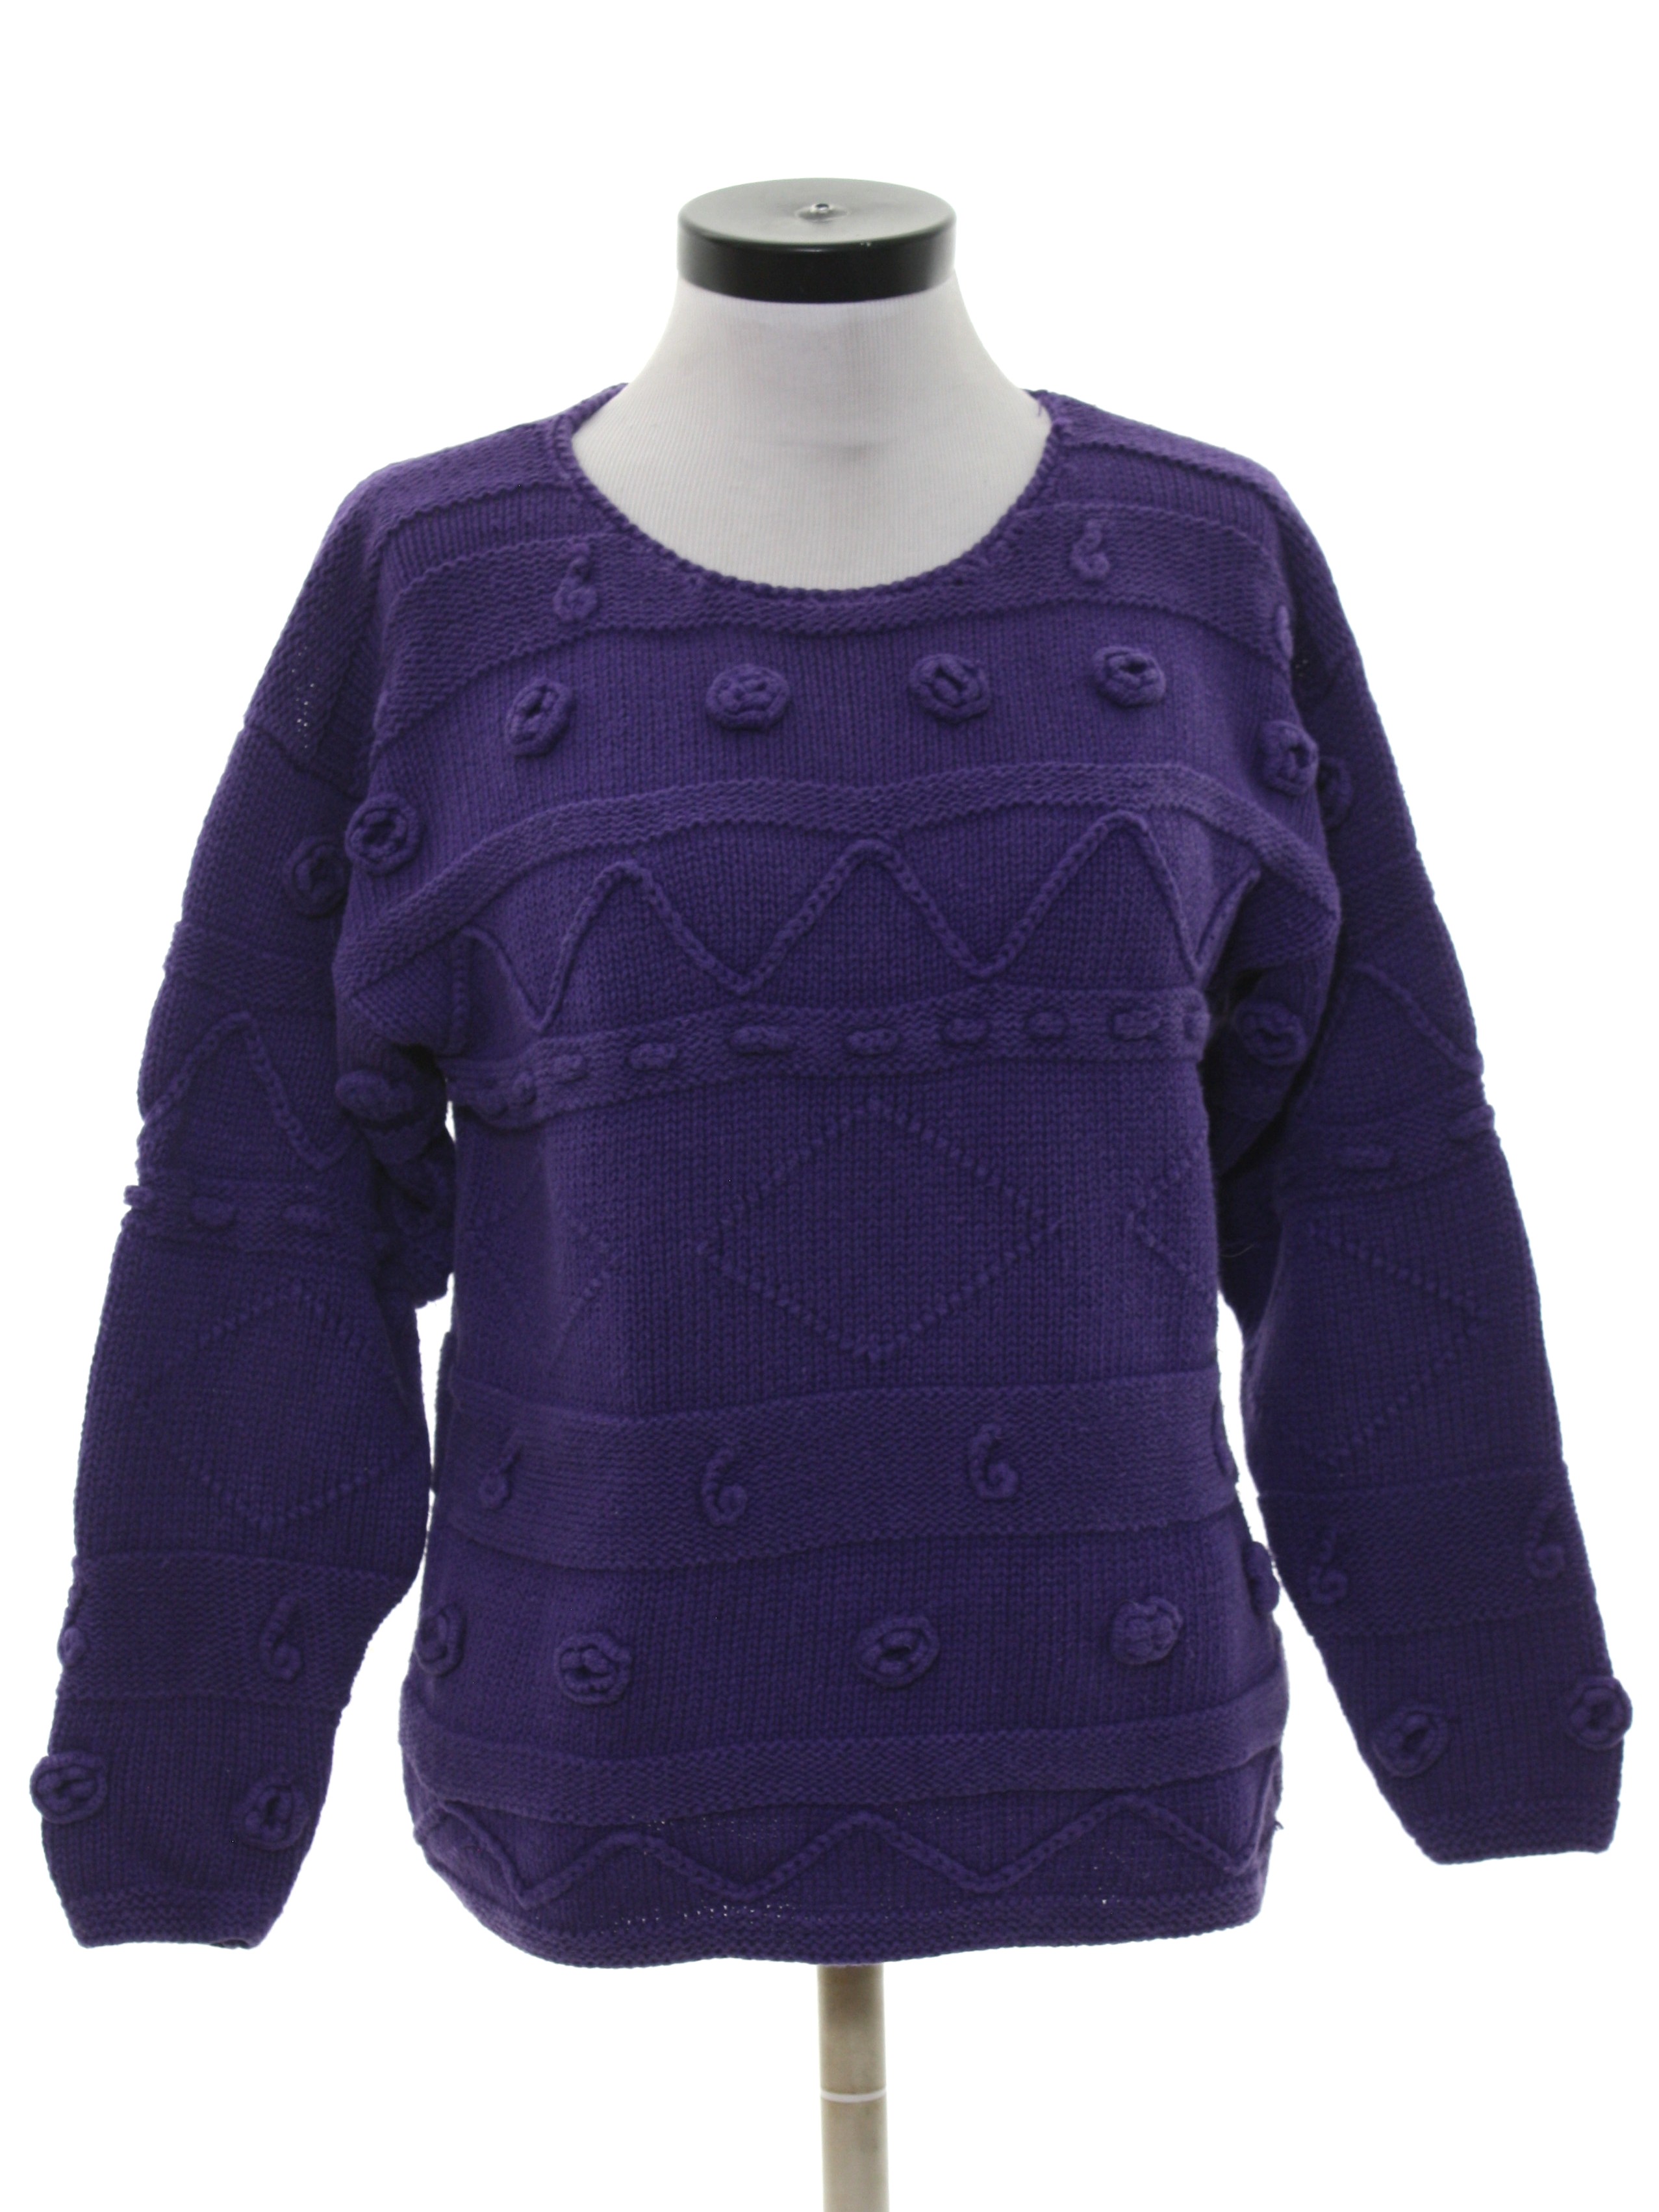 80s Retro Sweater: 80s -Missing Label- Womens purple background cotton ...